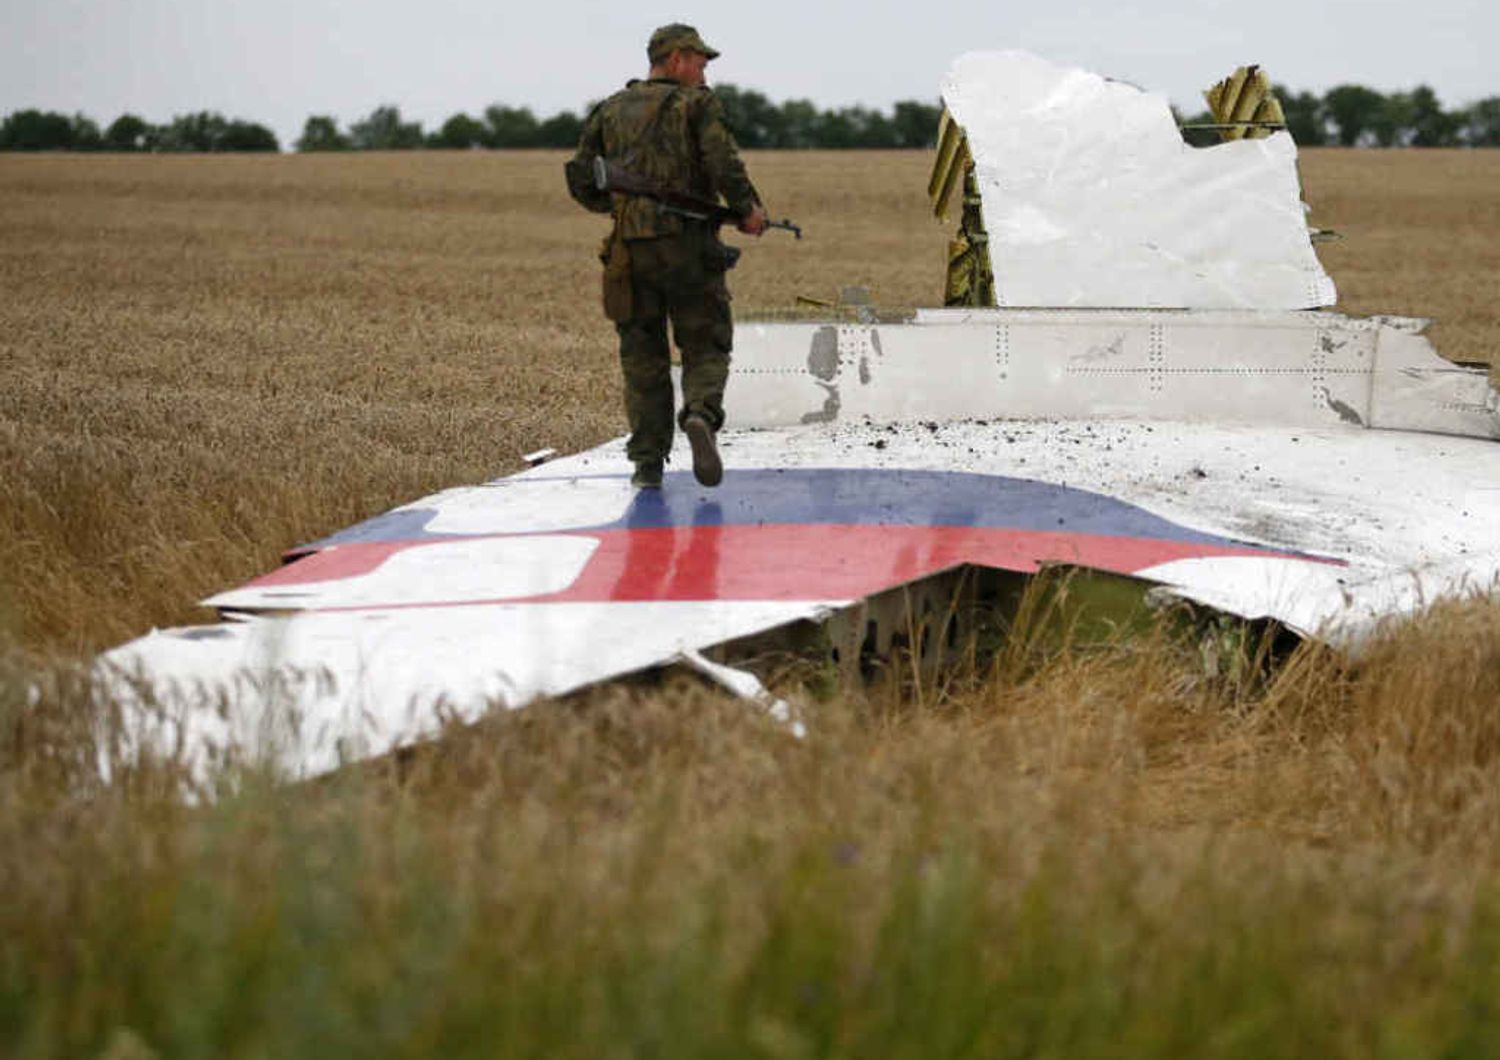 Dutch PM: Putin must take responsibility for MH17 crash